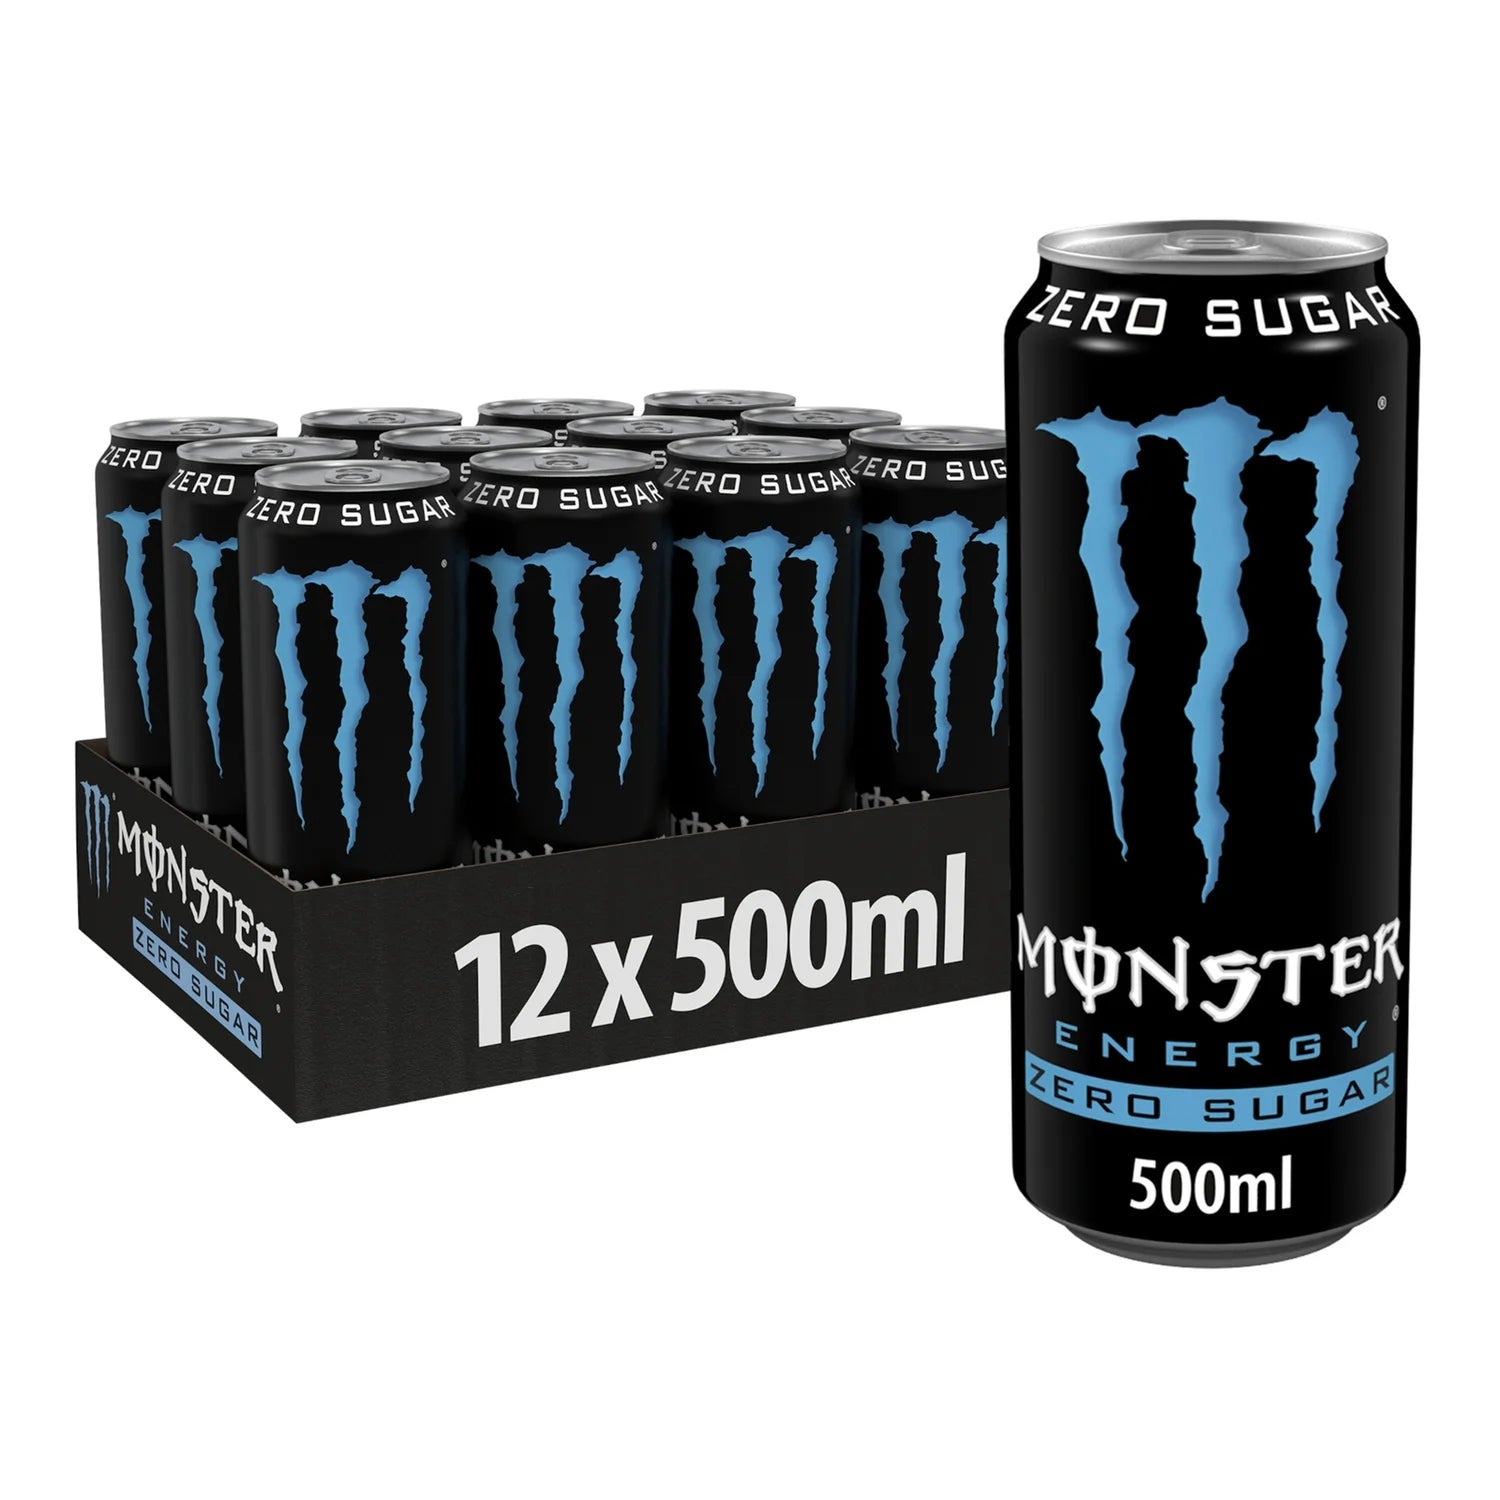 Monster Energy Drink Absolutely Zero Sugar - 500ml - Case of 12